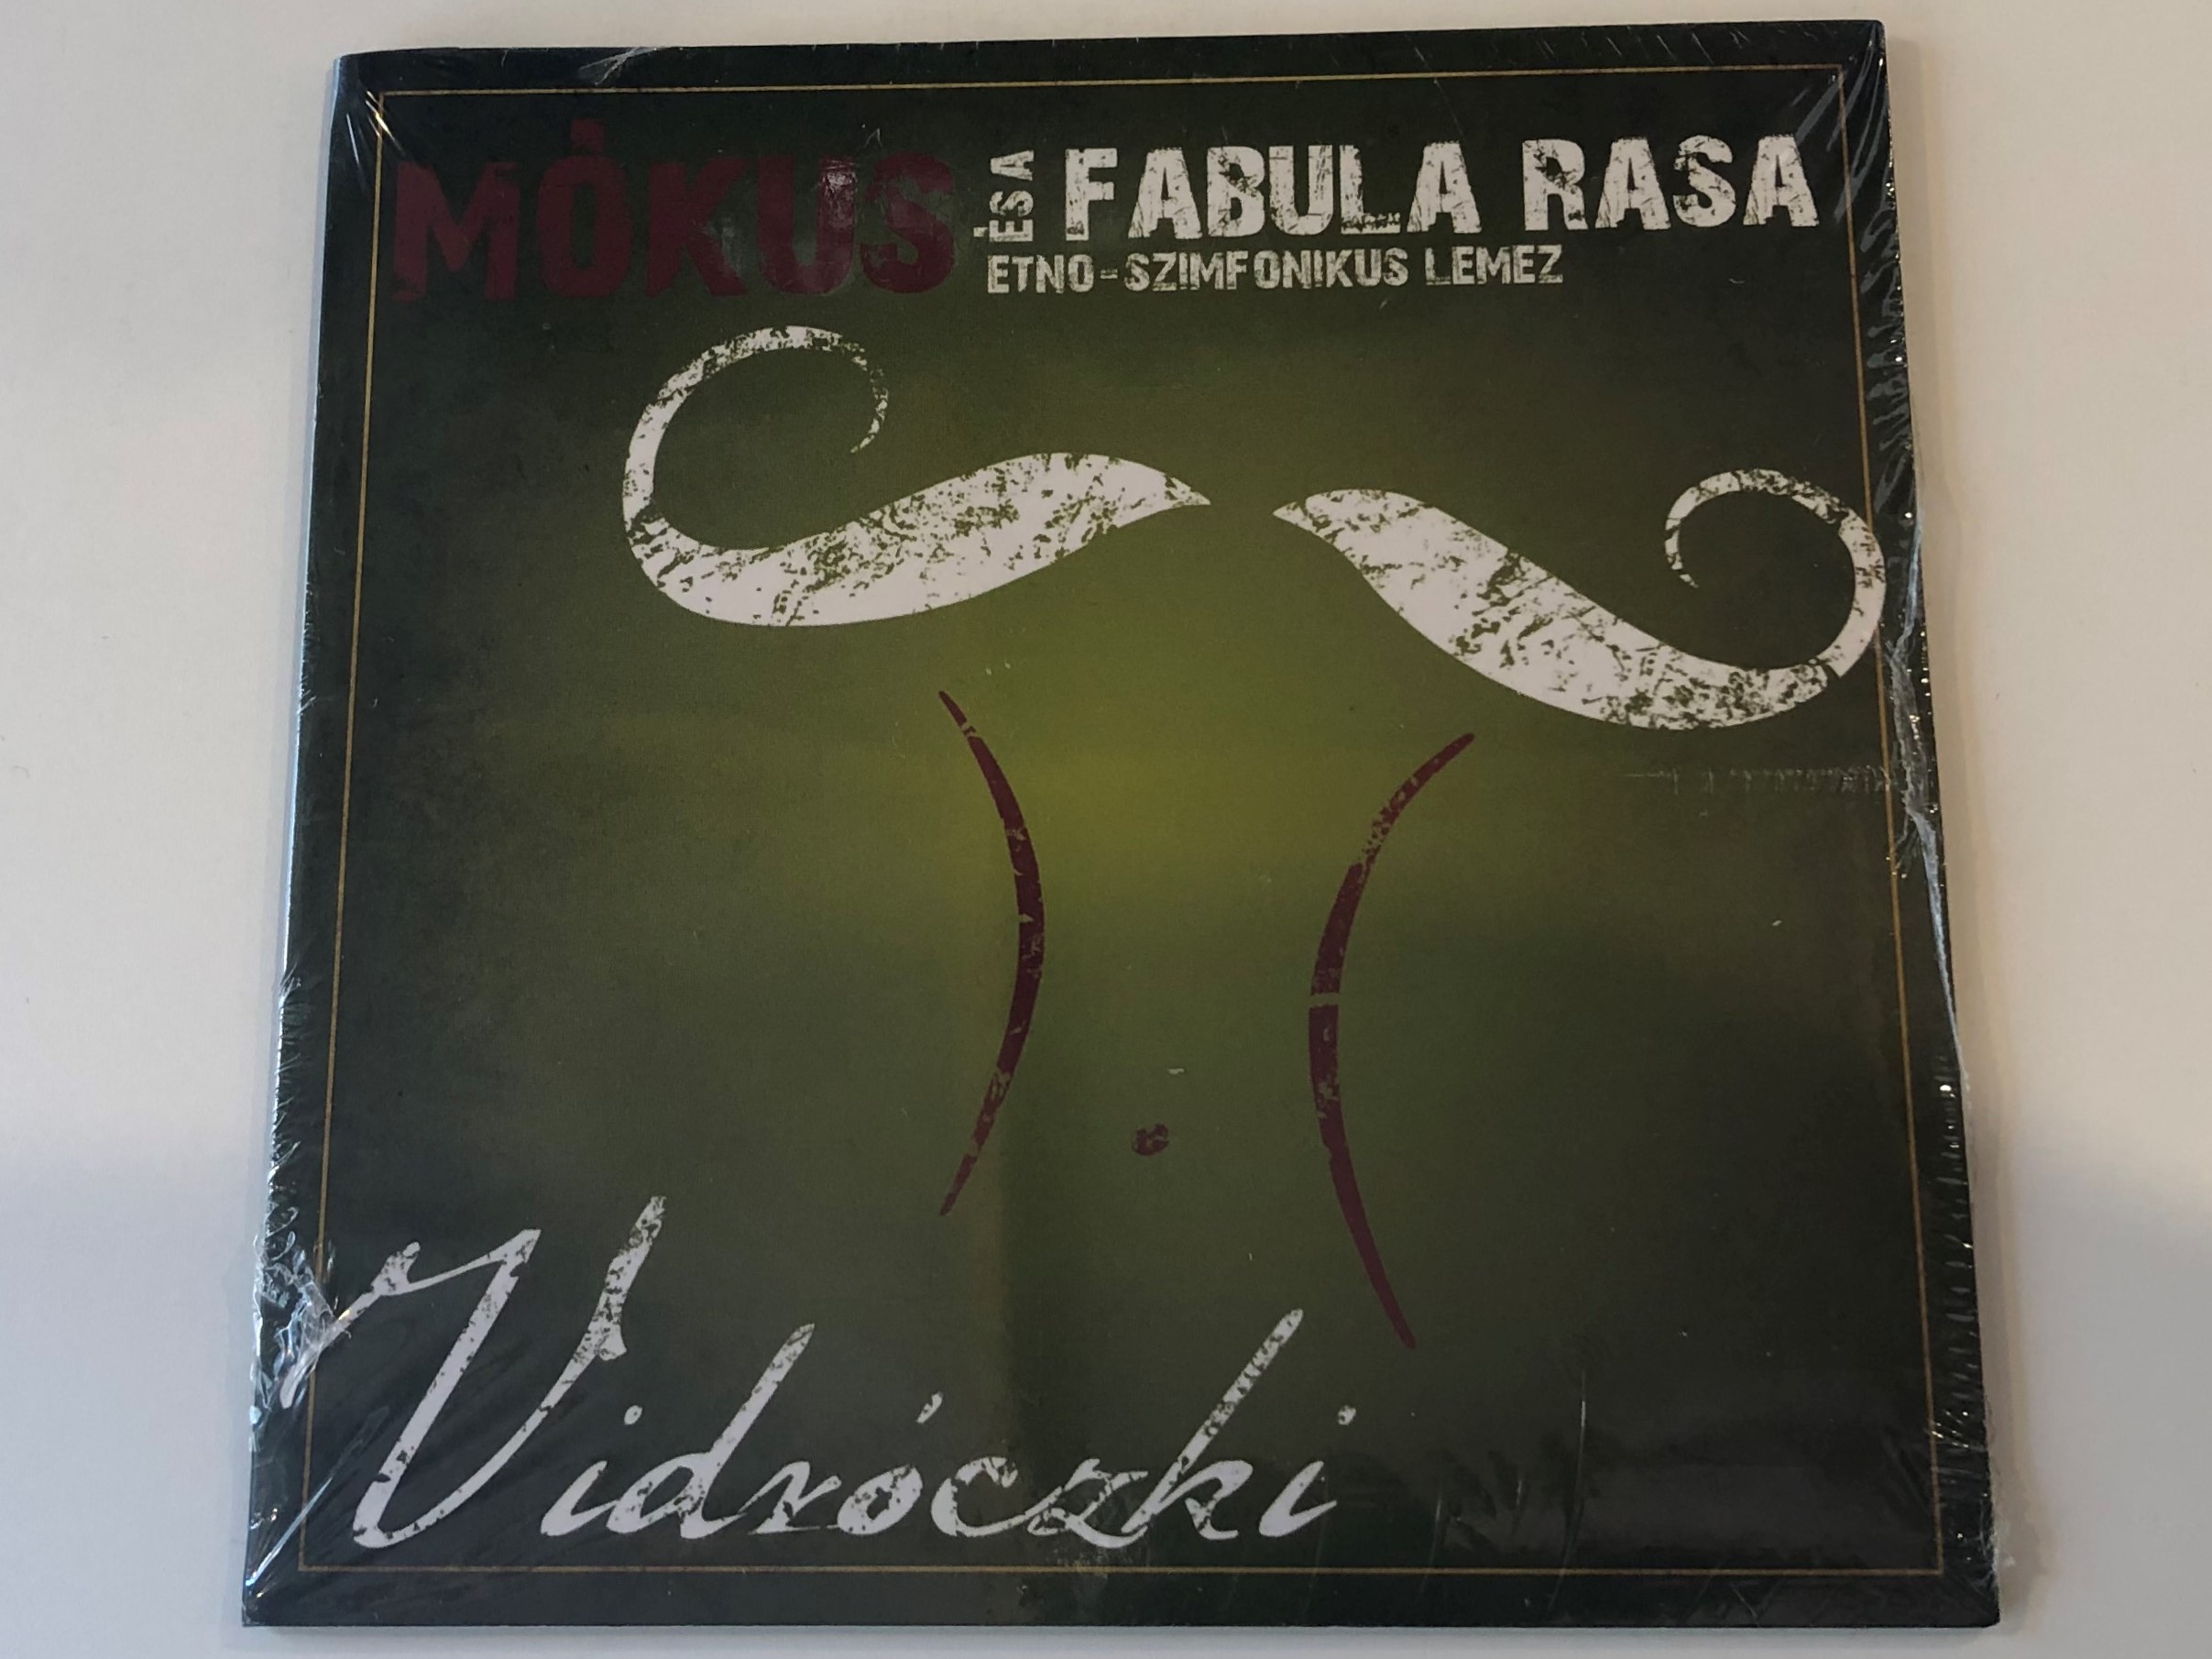 m-kus-s-a-fabula-rasa-vidr-czki-gryllus-audio-cd-2016-gcd-168-1-.jpg